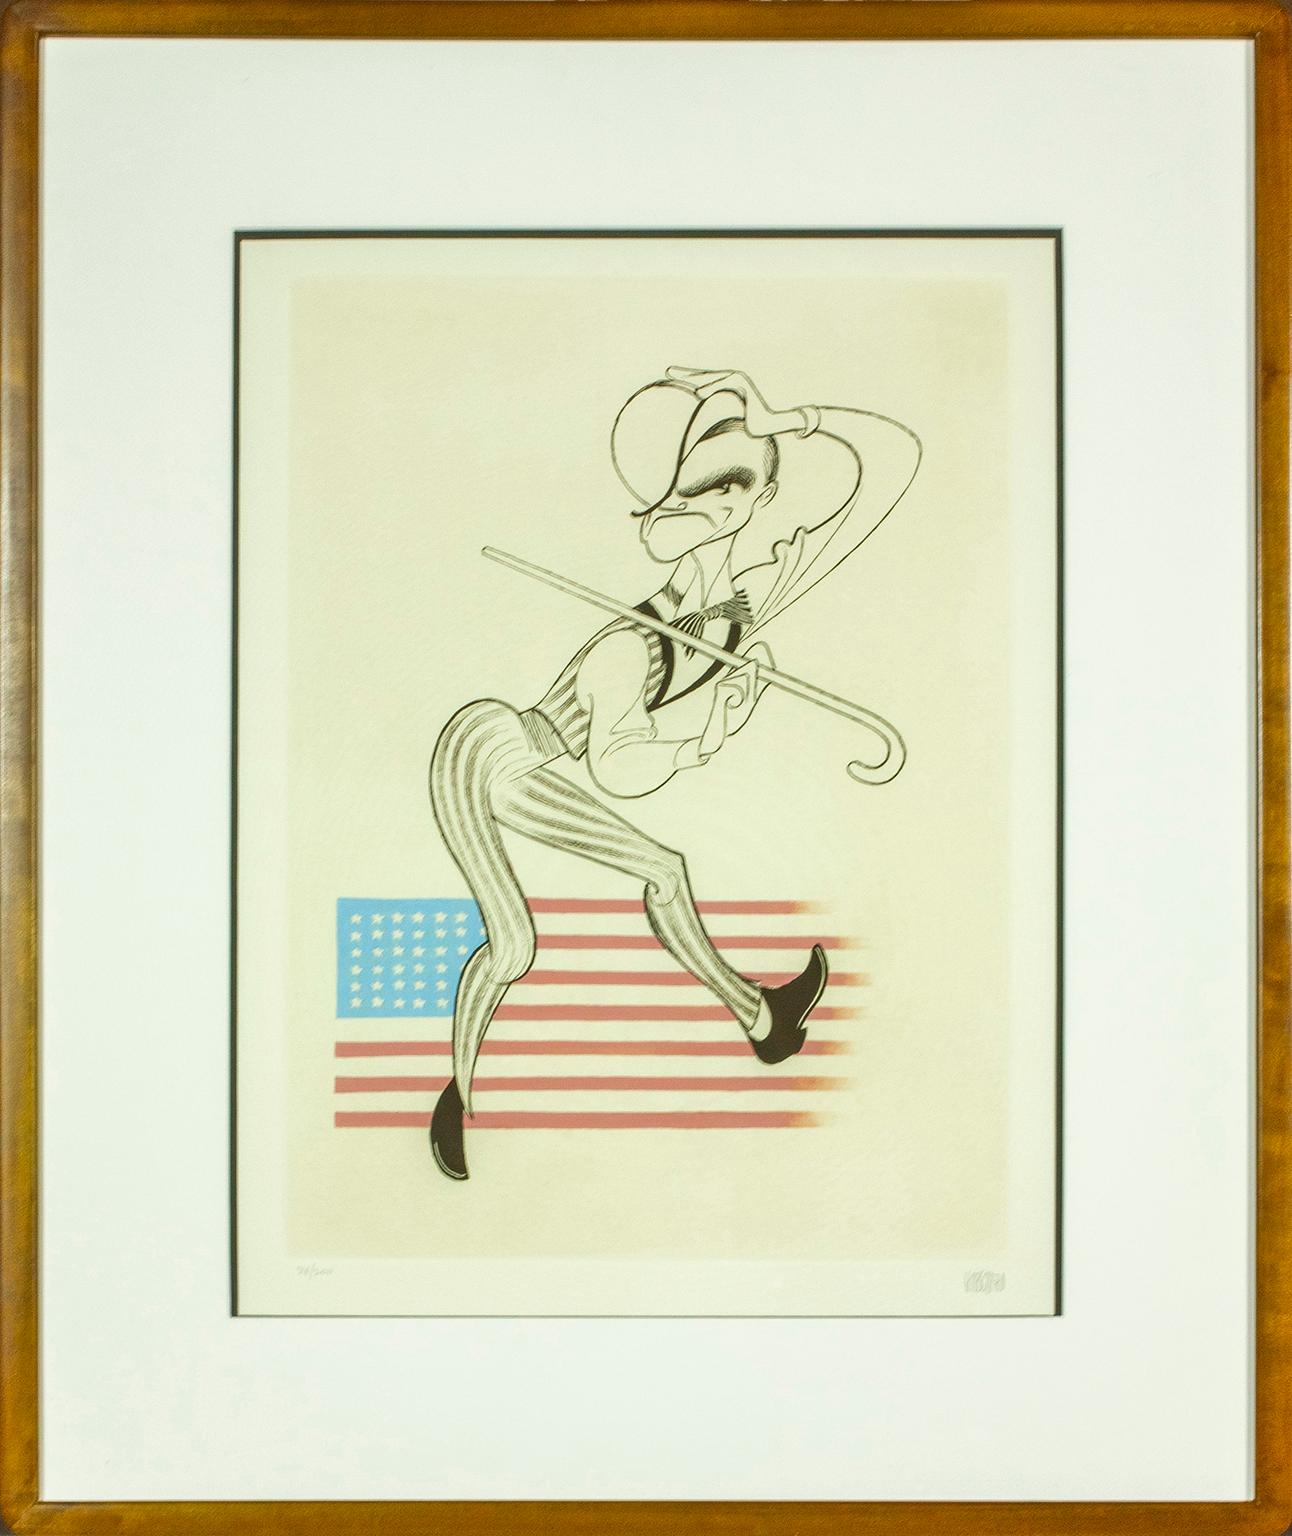 Albert Al Hirschfeld Figurative Print - "James Cagney" in "Yankee Doodle Dandy" signed original etching by Al Hirschfeld